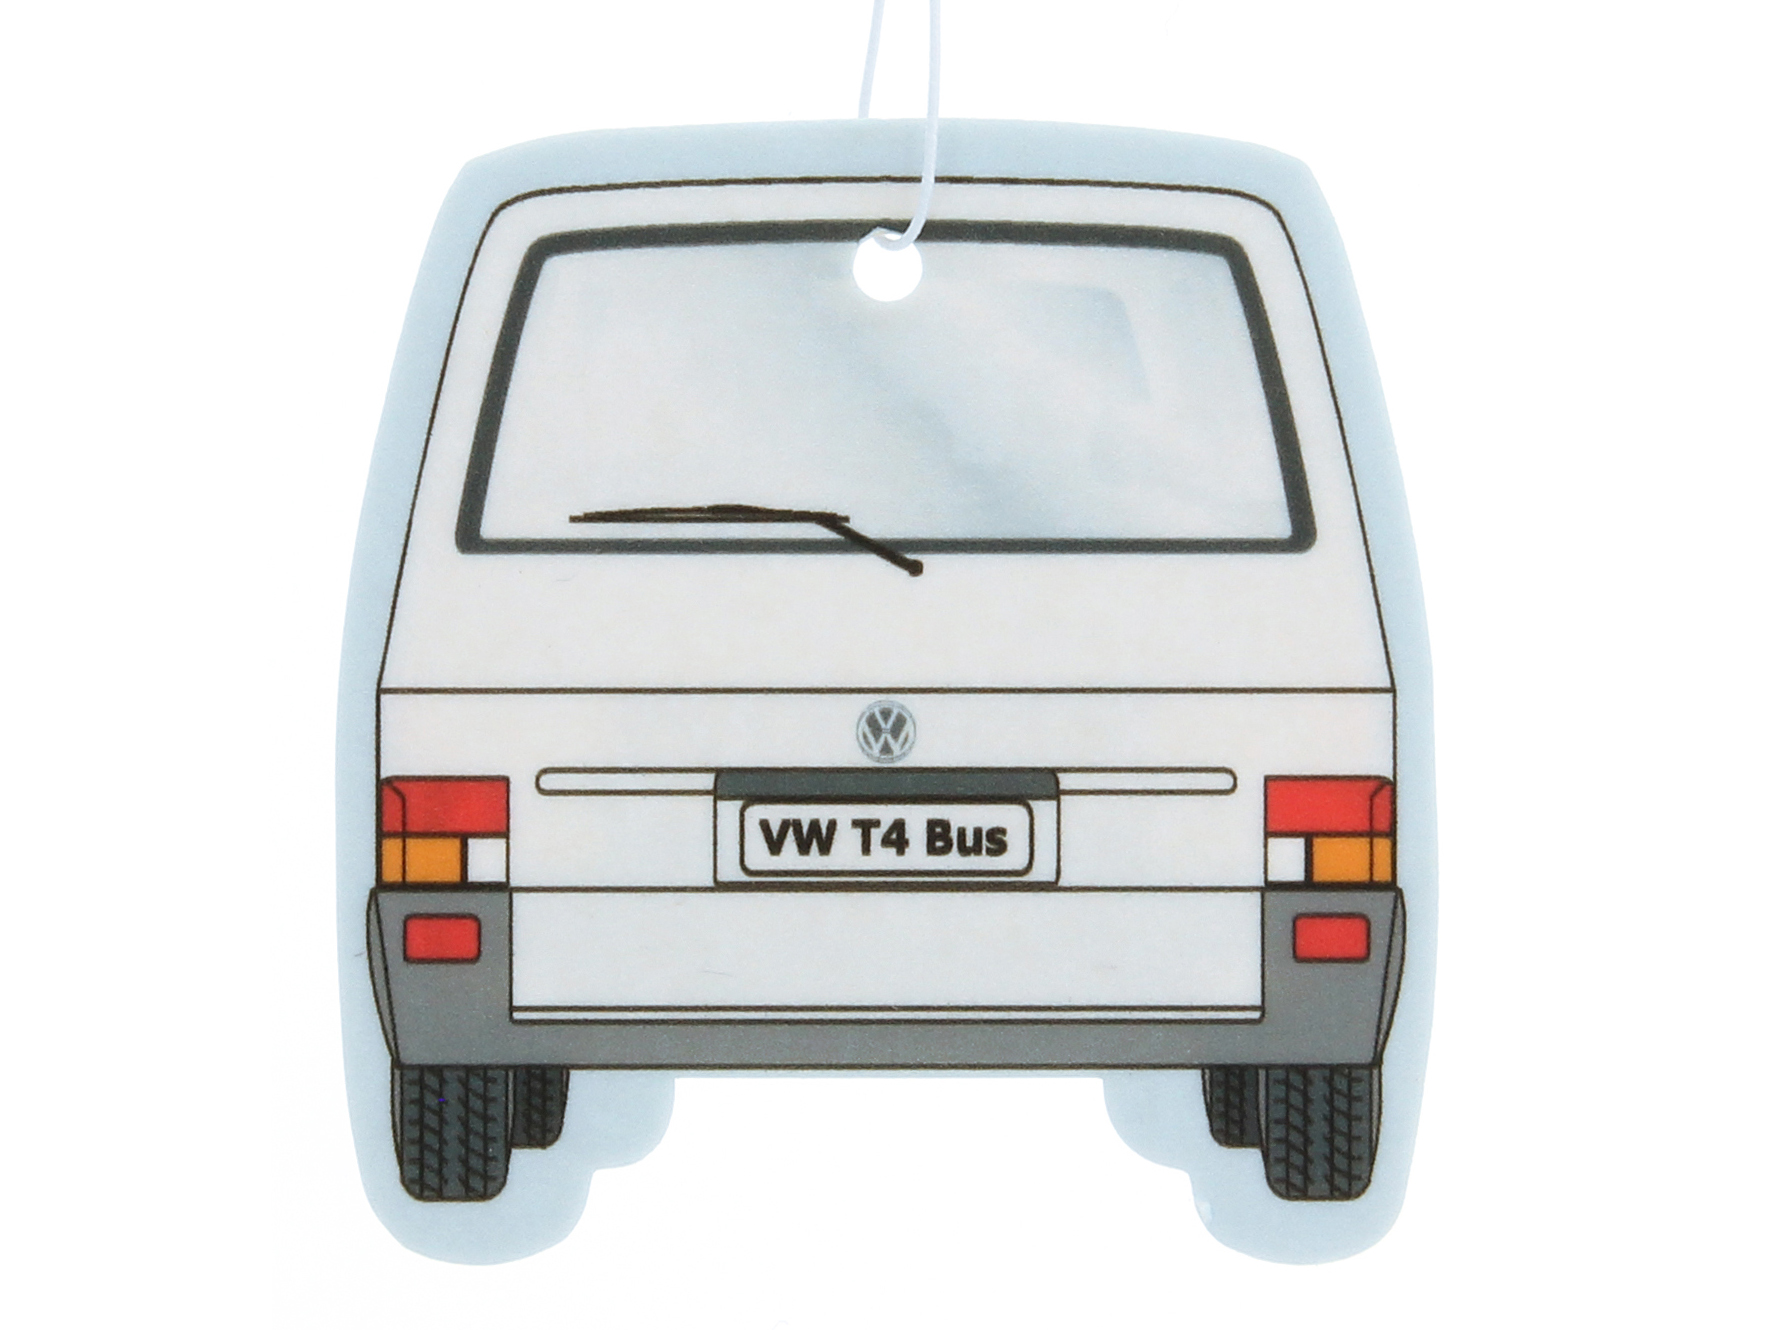 VW T4 Bus air freshener front